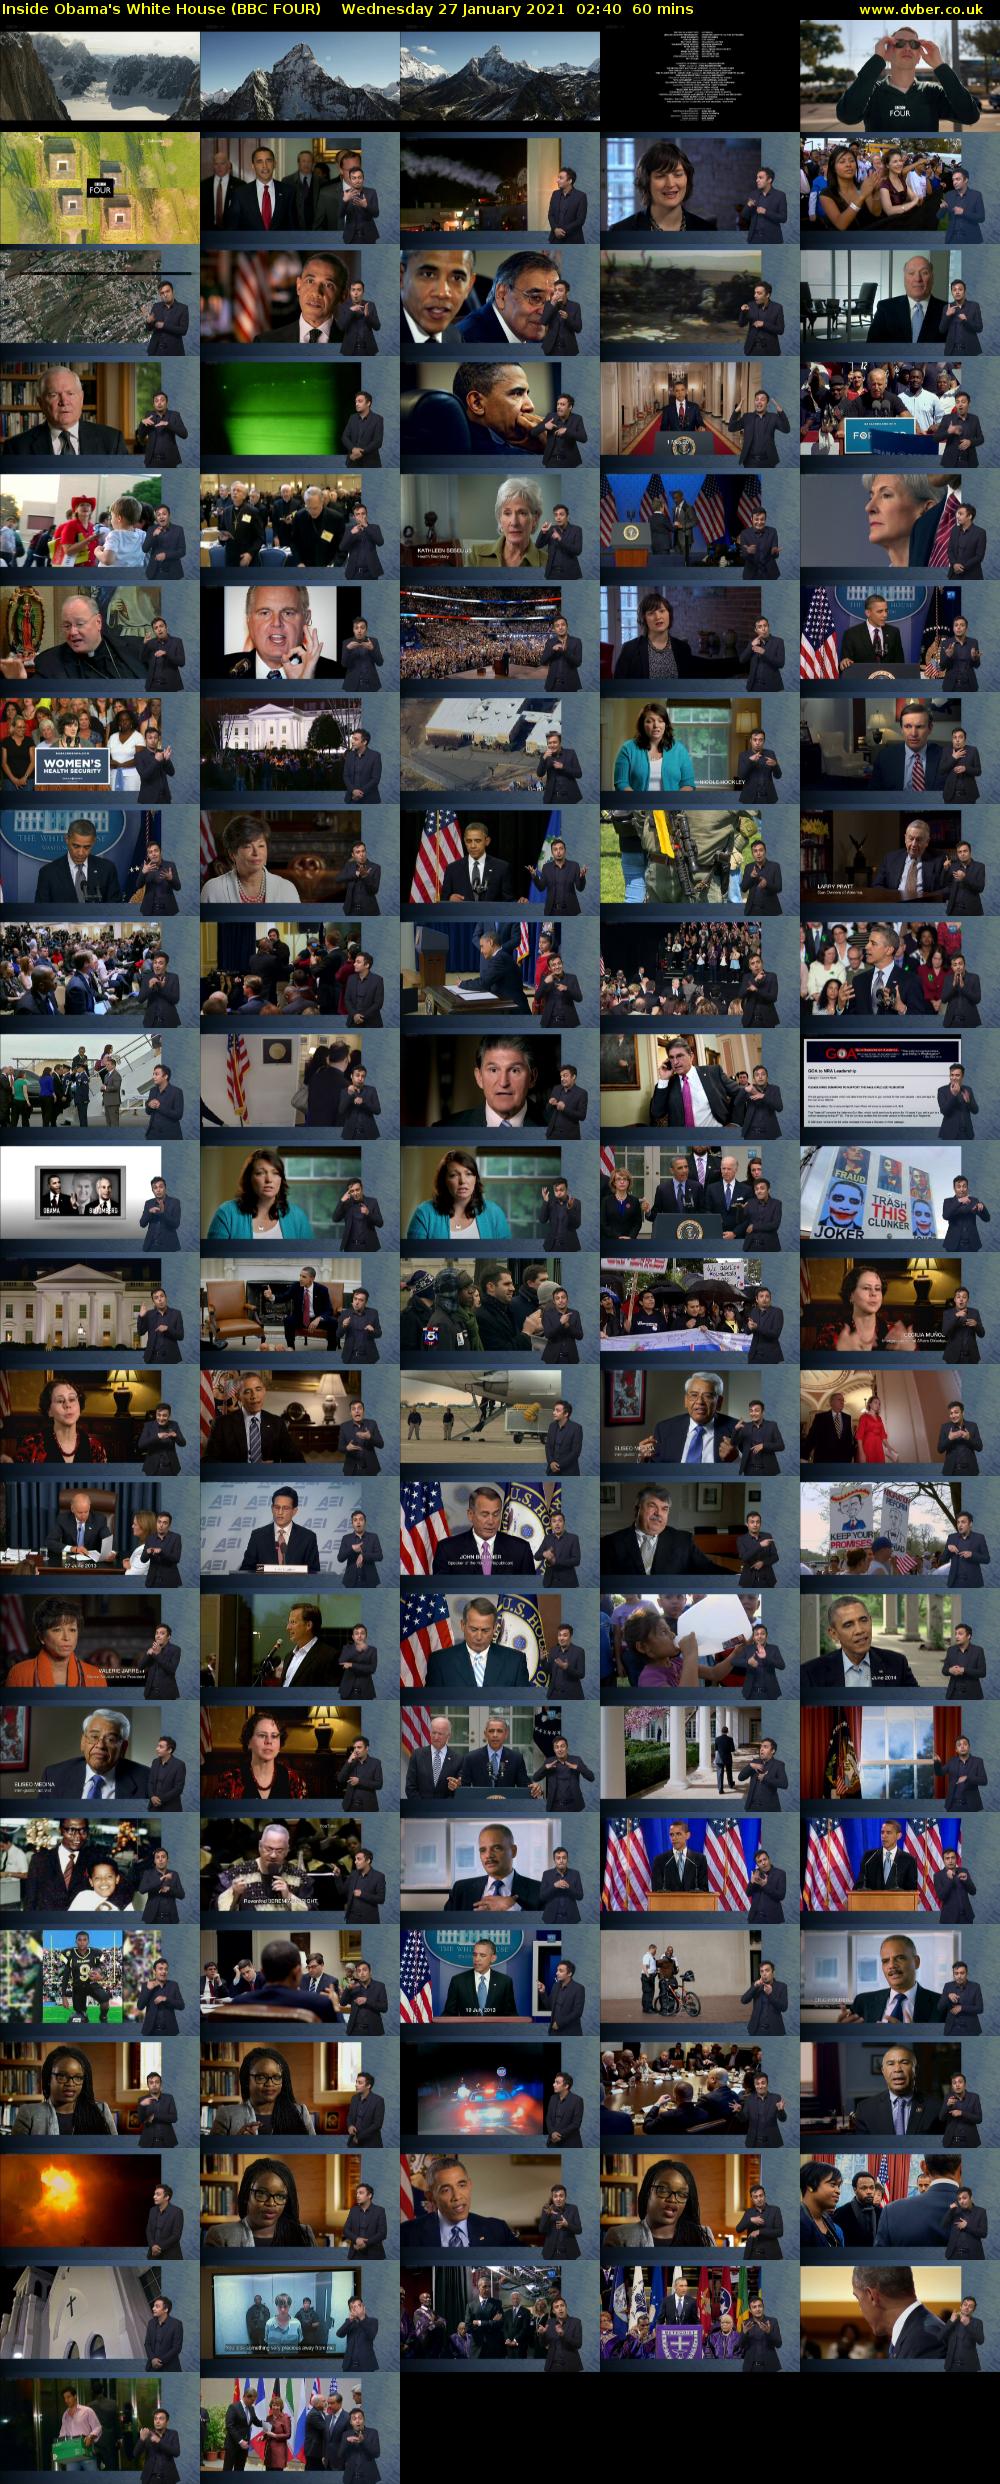 Inside Obama's White House (BBC FOUR) Wednesday 27 January 2021 02:40 - 03:40